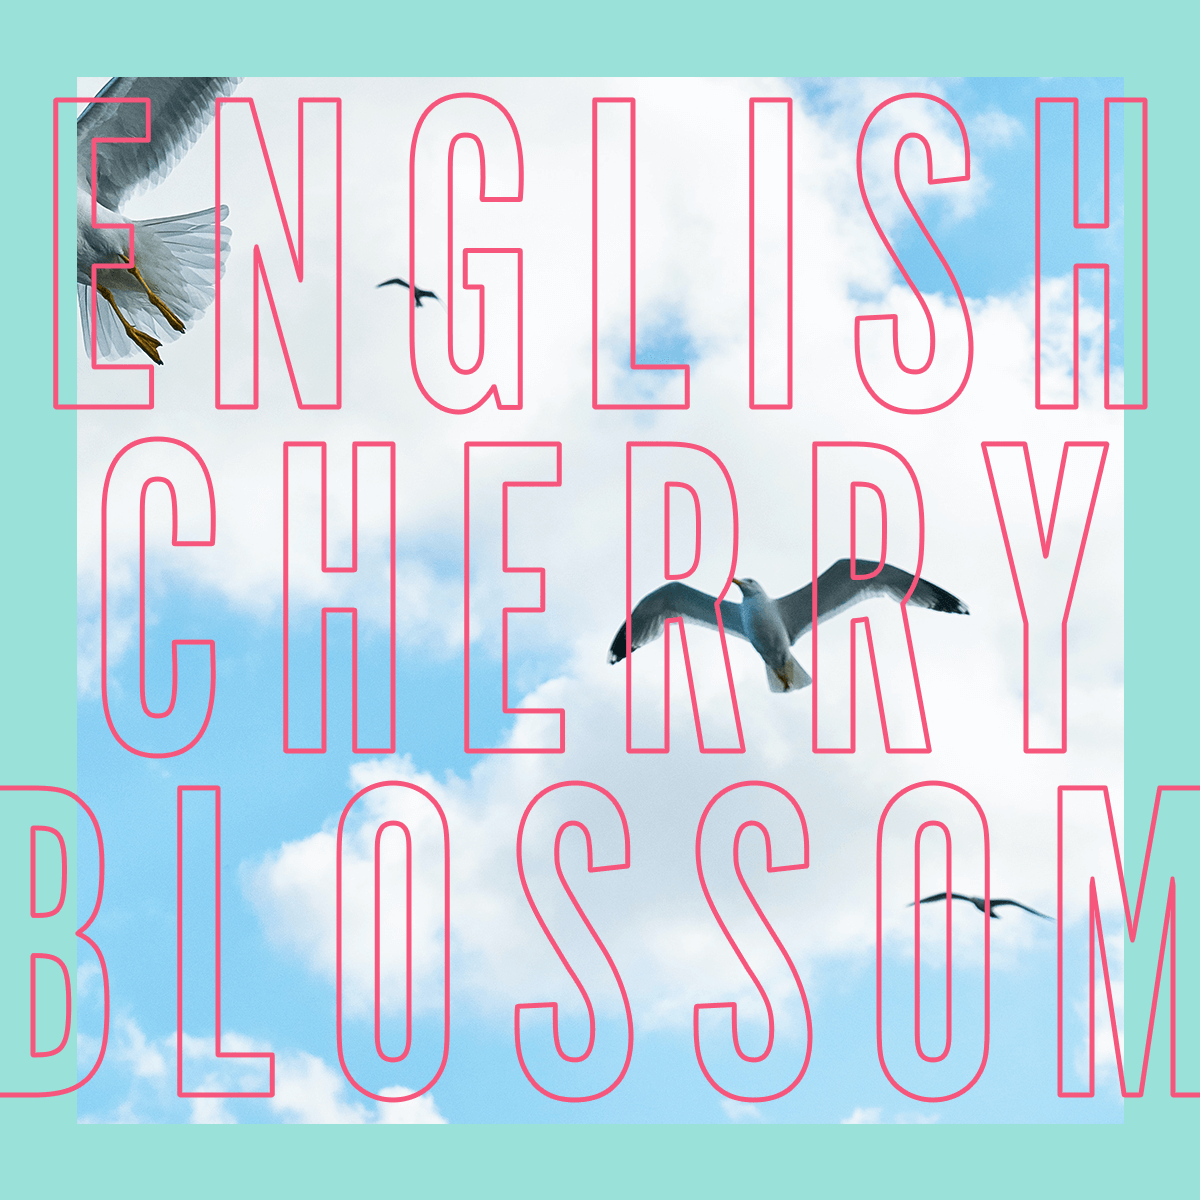 English Cherry Blossom Fragrance 100ml